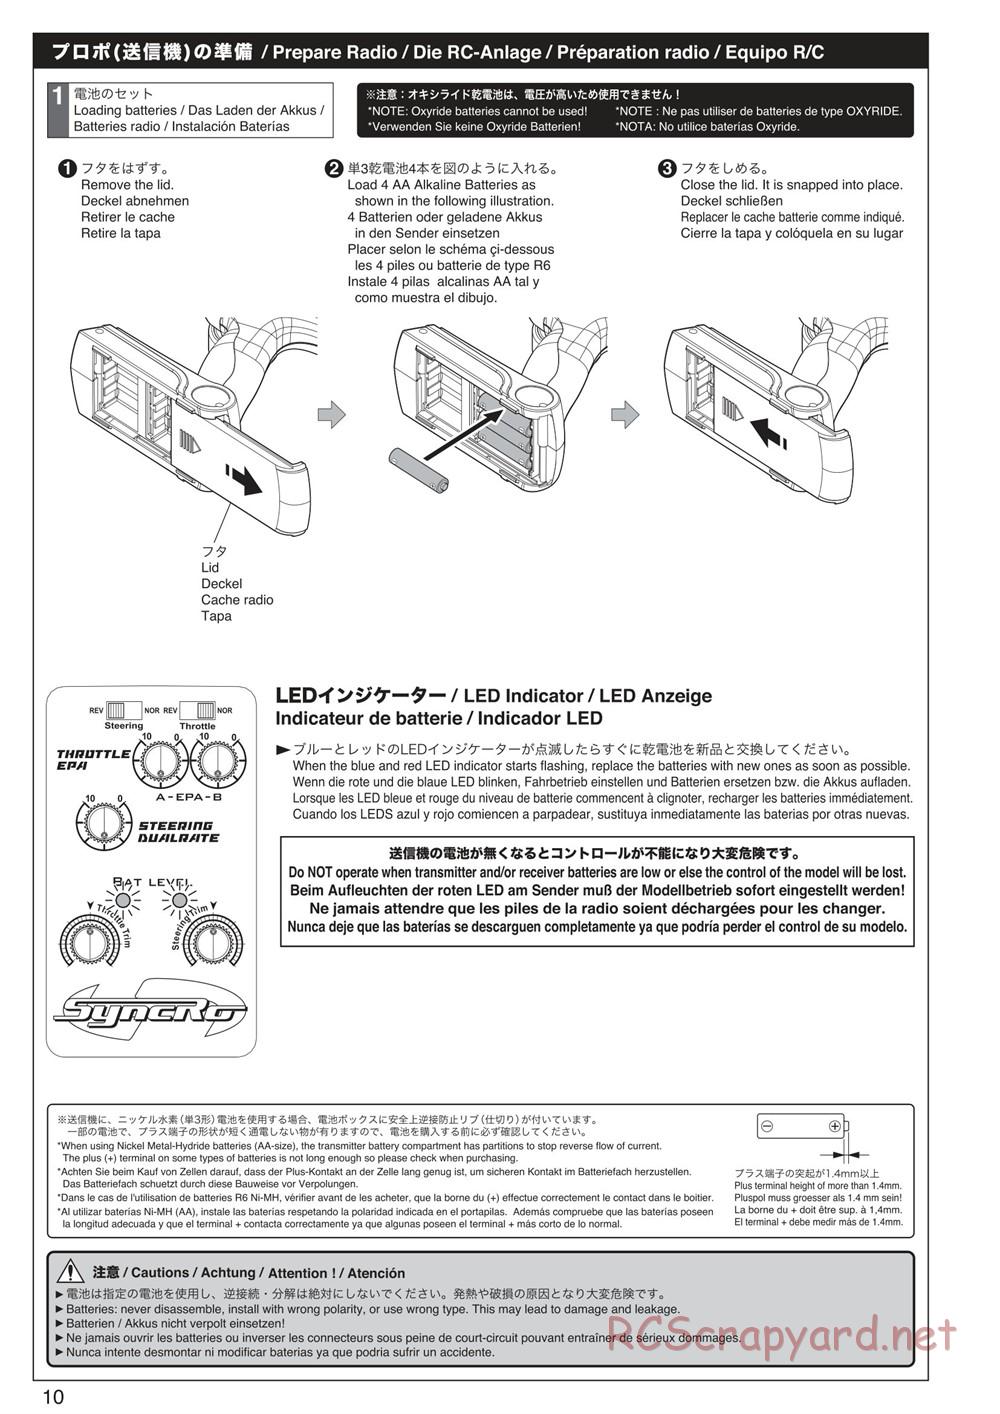 Kyosho - DMT-VE - Manual - Page 10